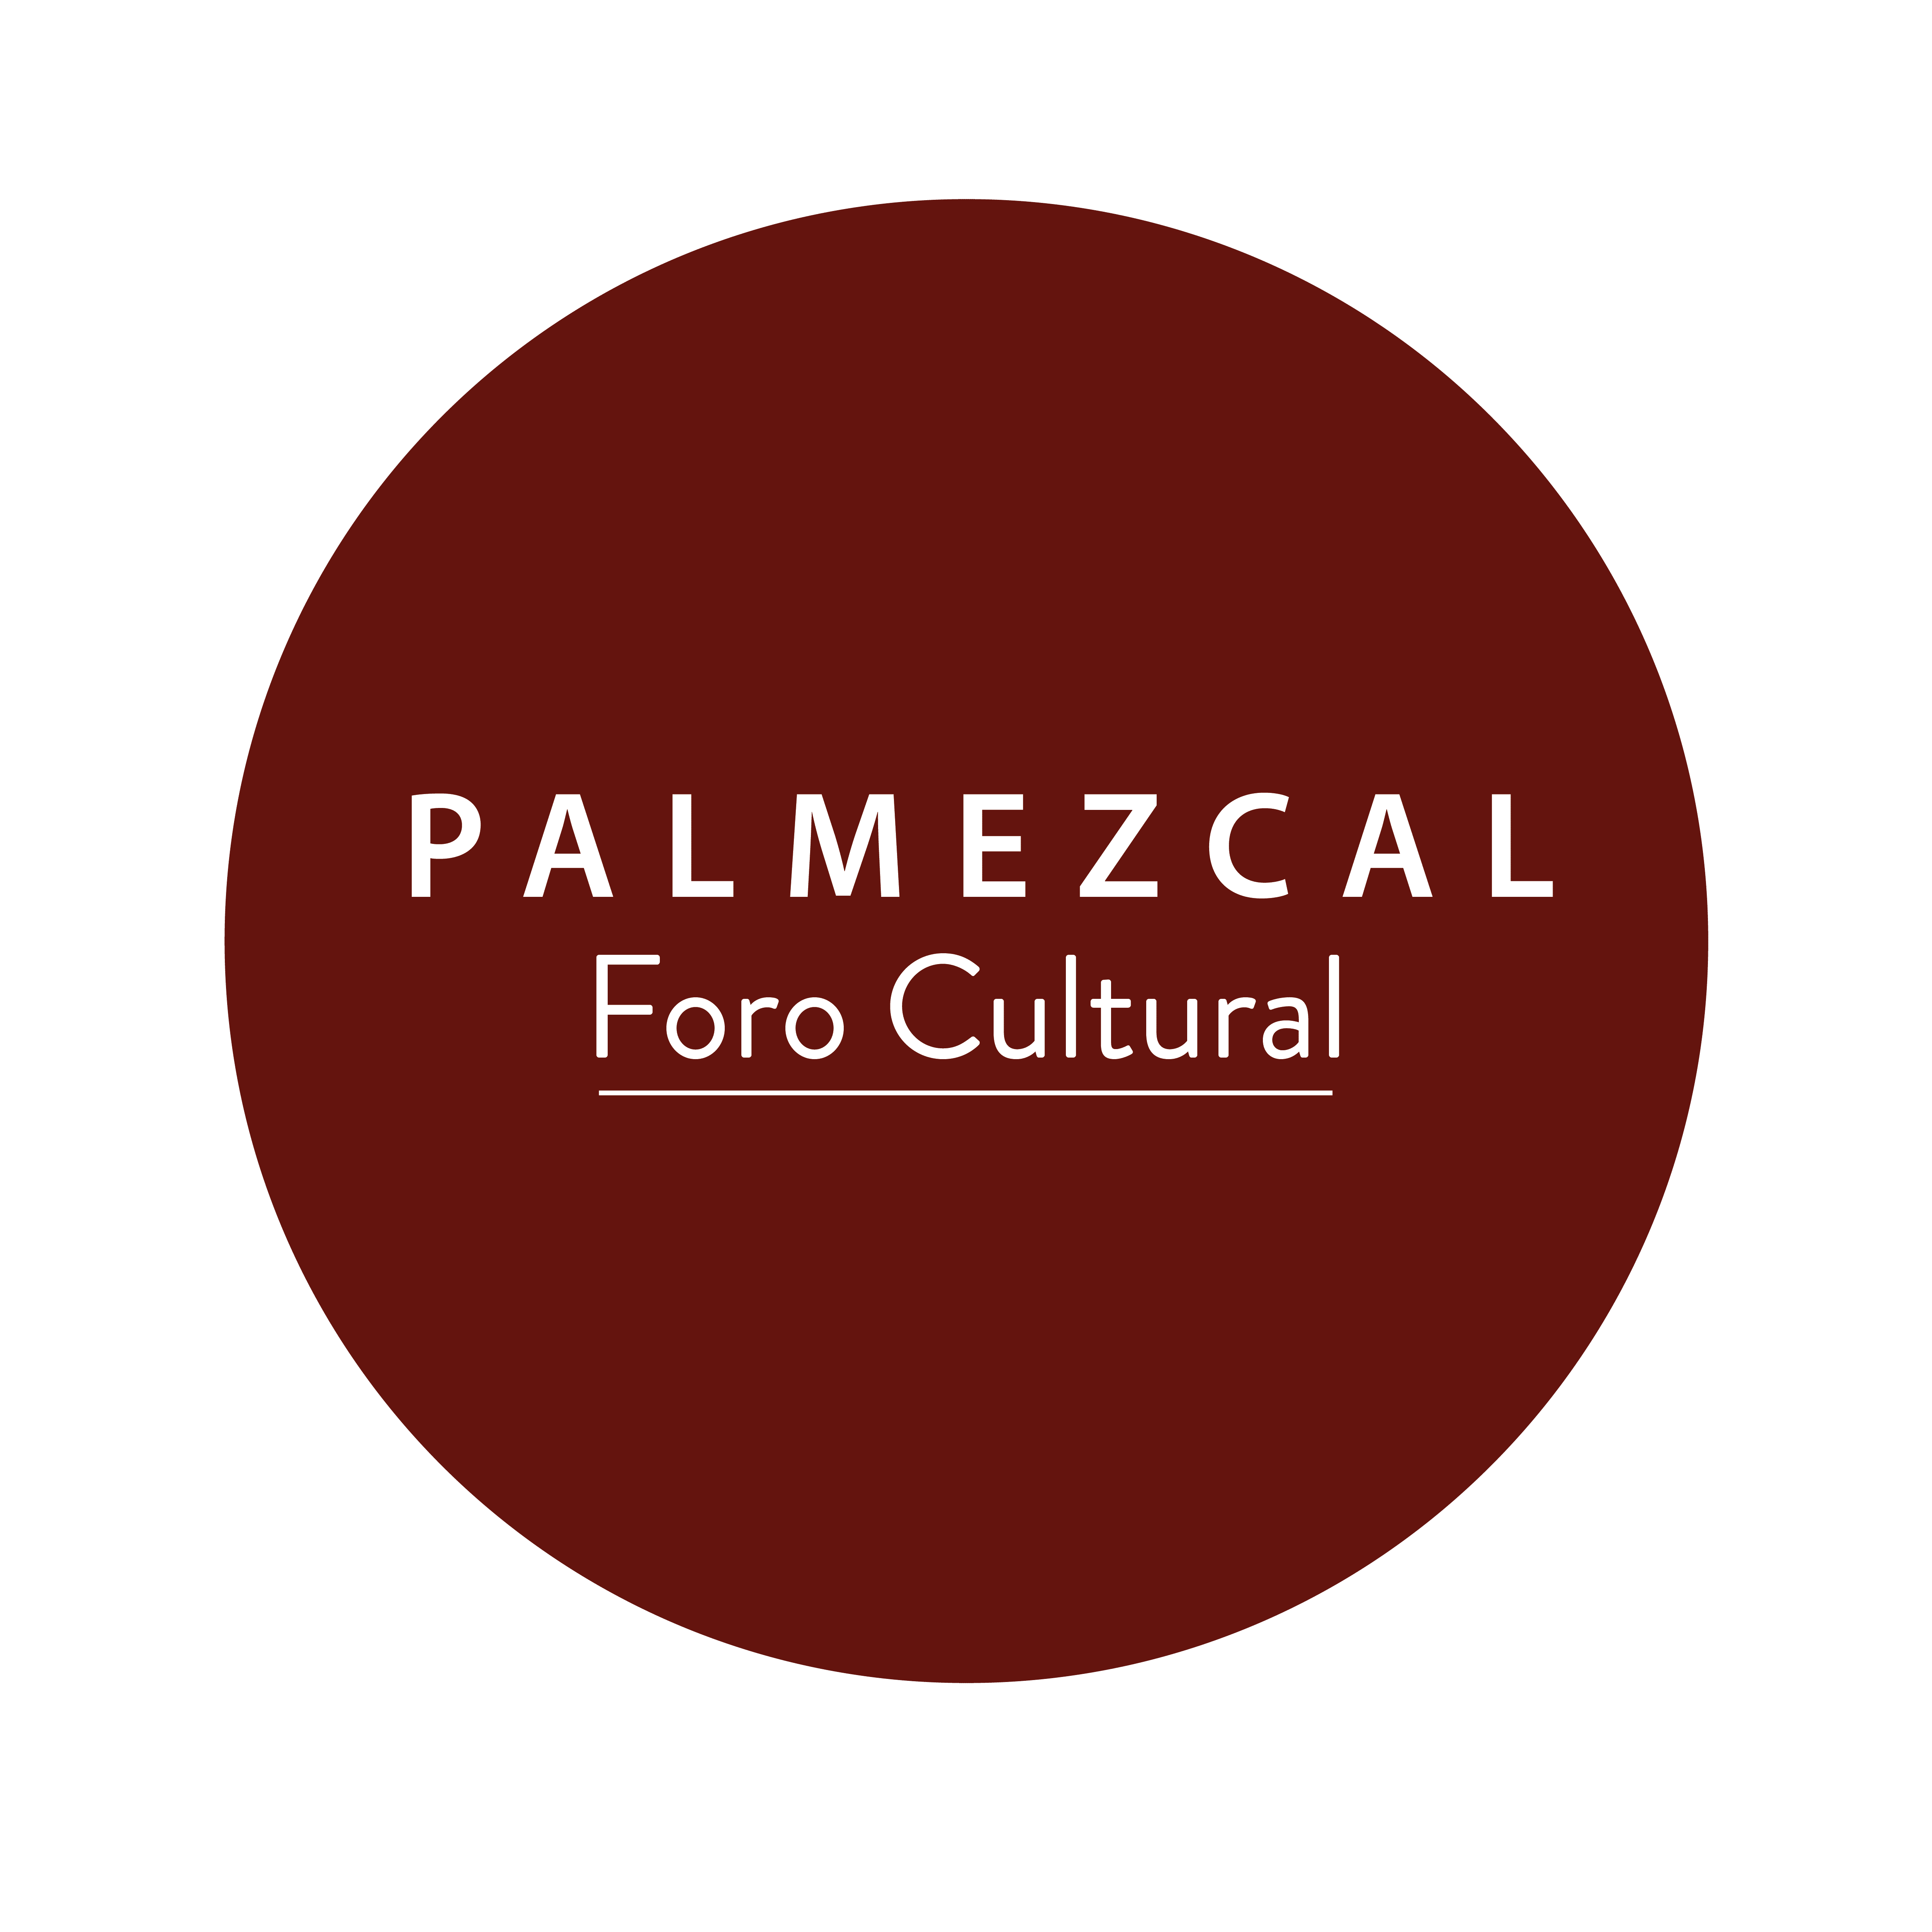 Palmezcal, Foro Cultural